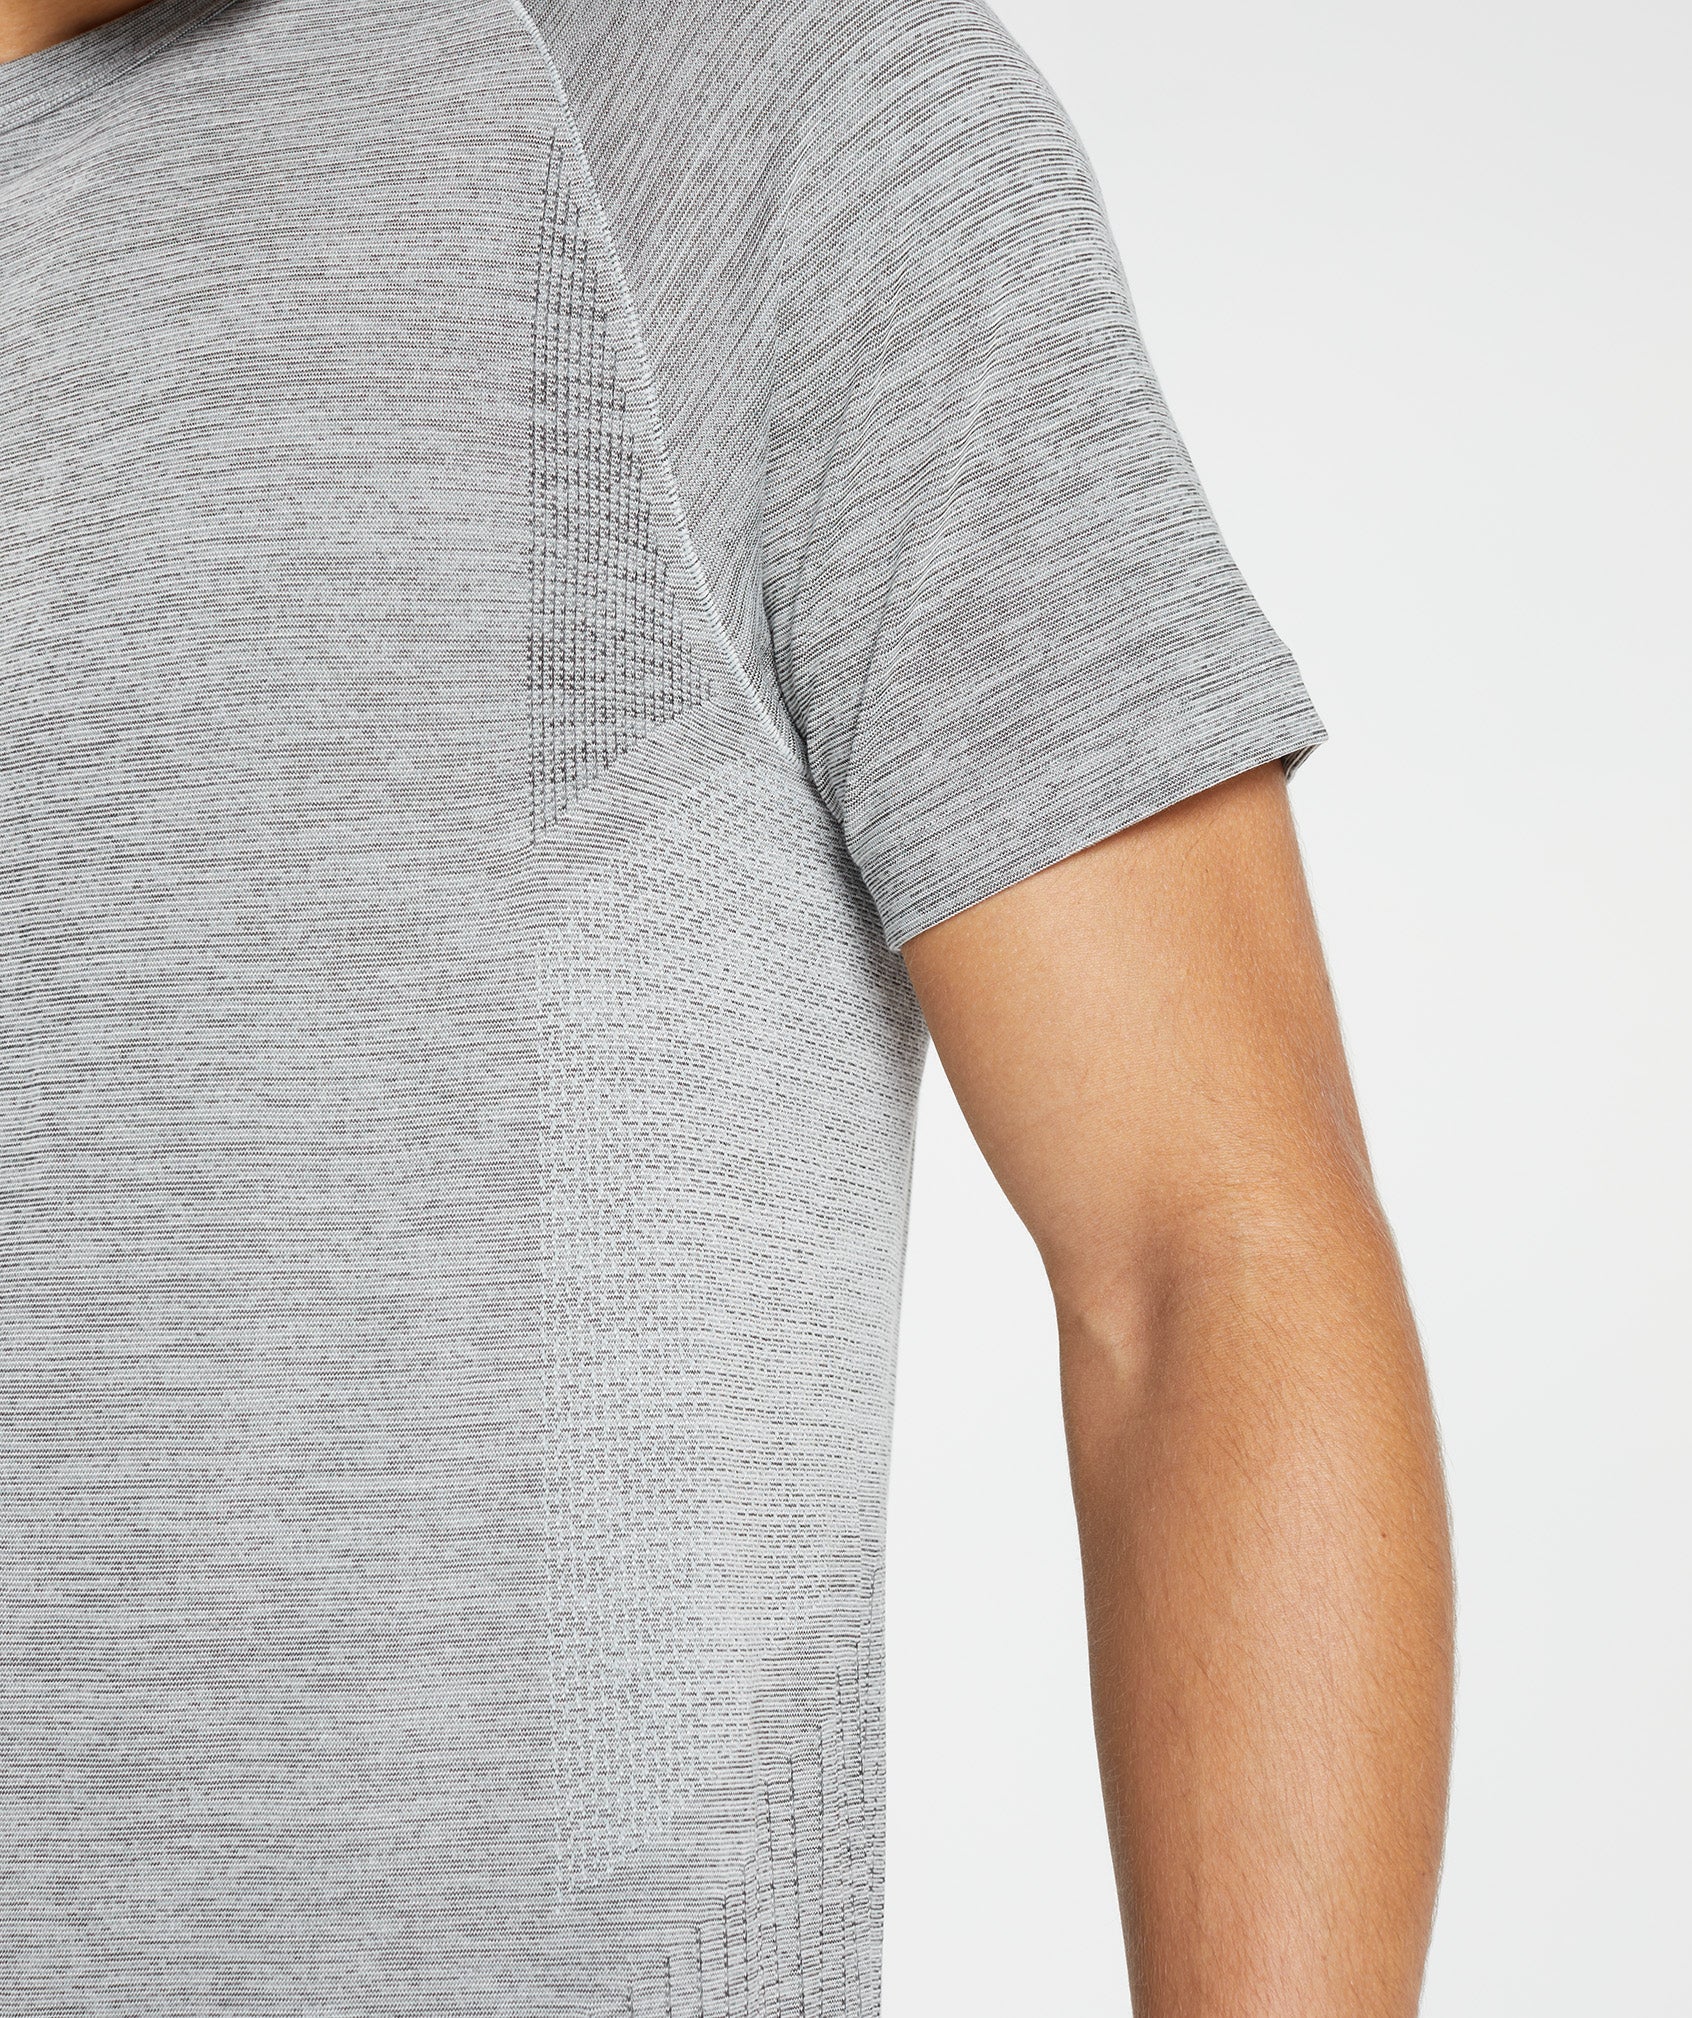 Retake Seamless T-Shirt in Light Grey/Black Marl - view 3